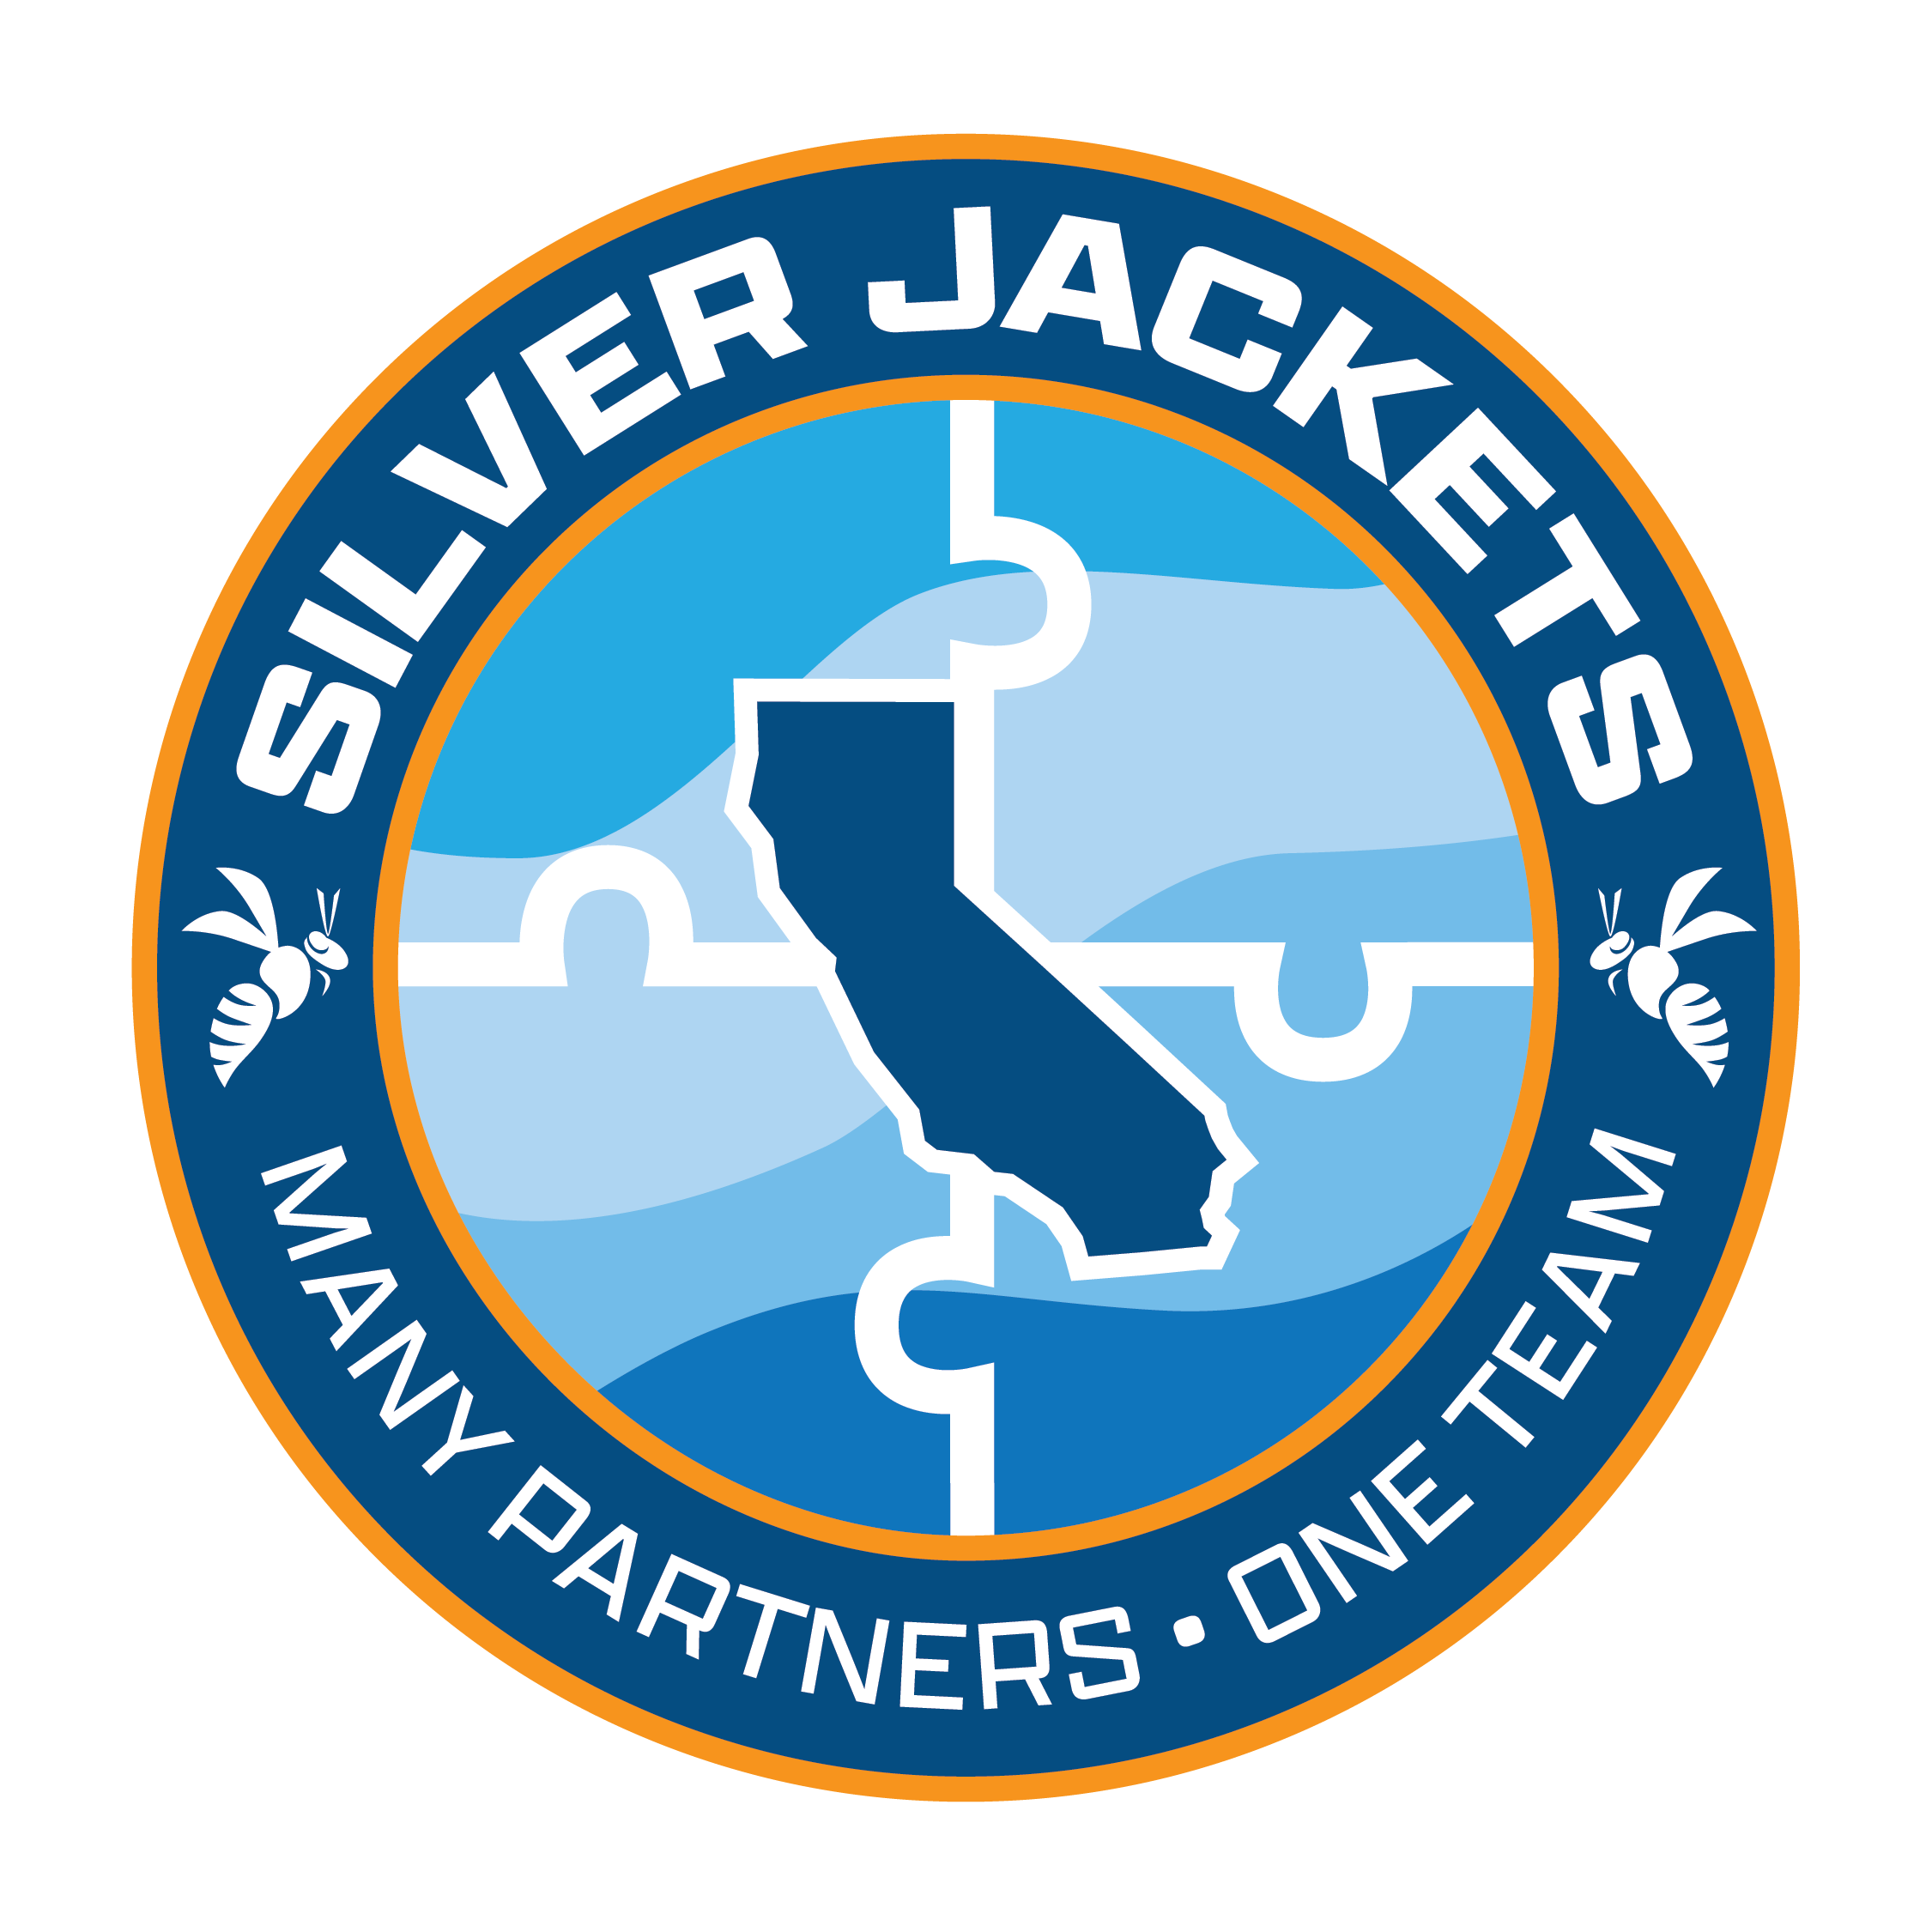 California Silver Jackets logo